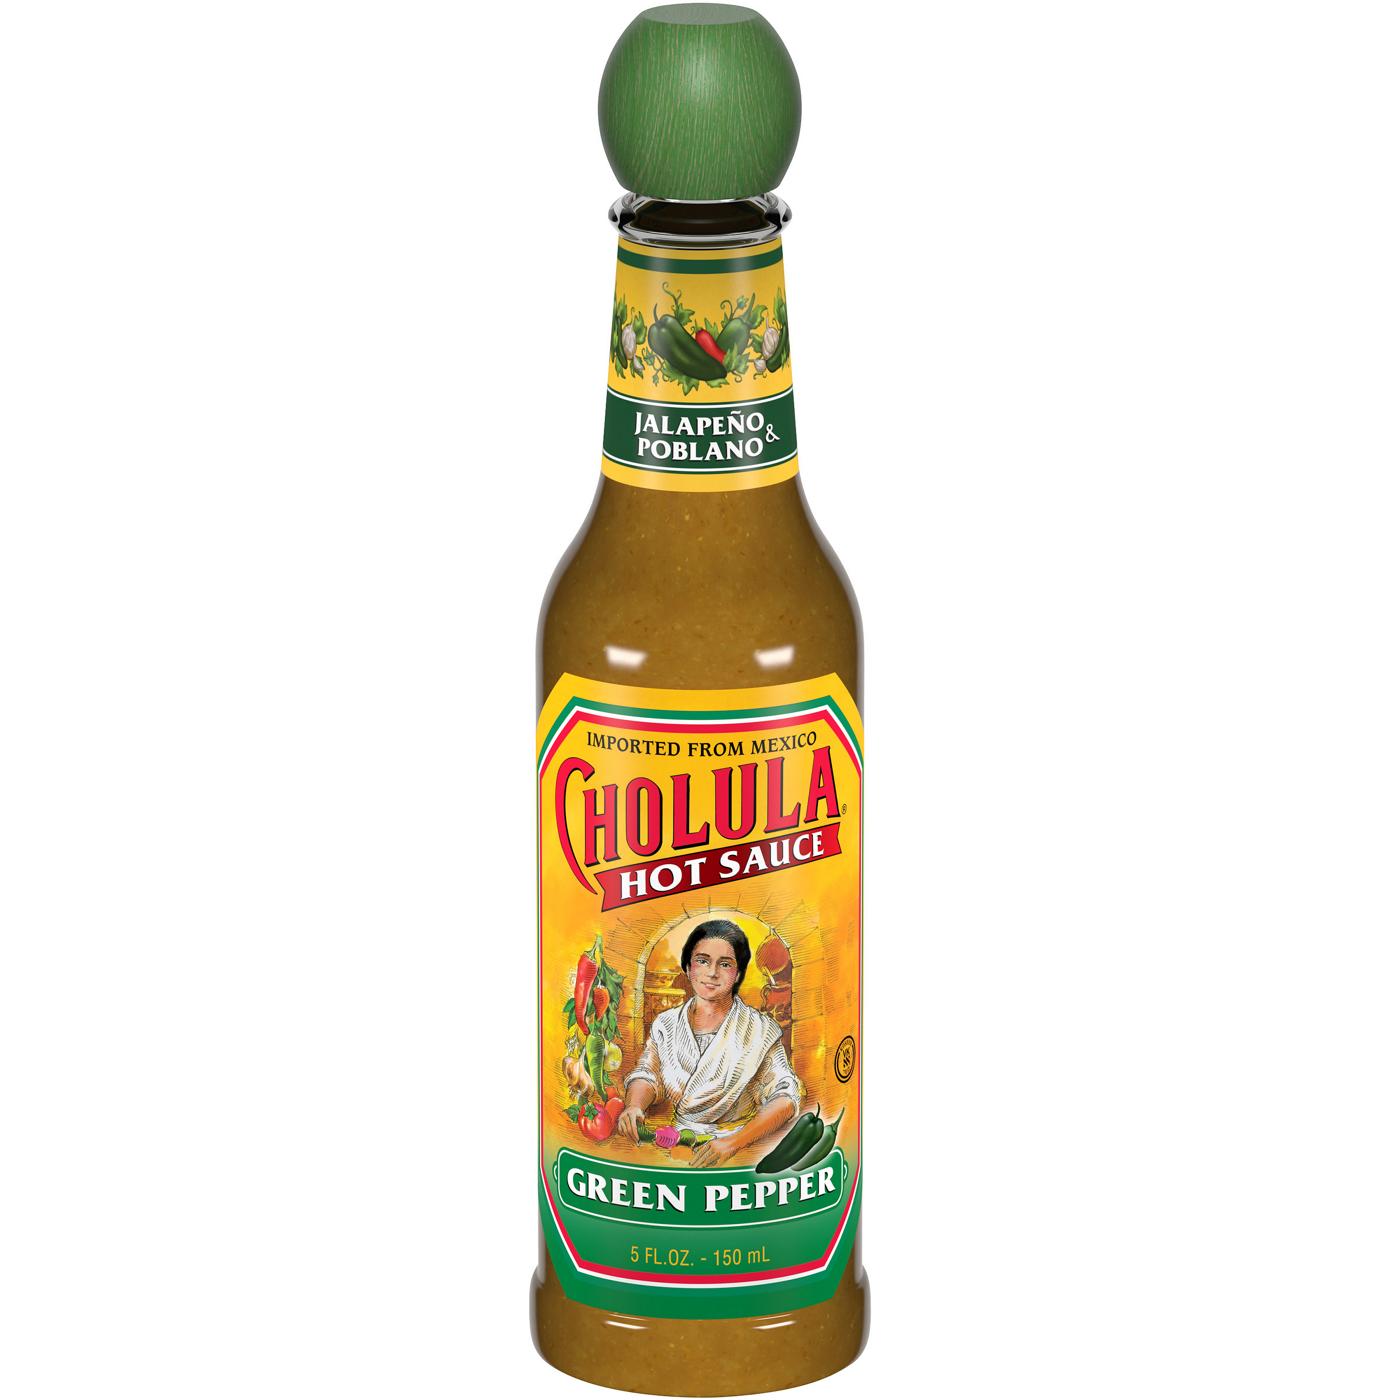 Cholula Green Pepper Hot Sauce; image 1 of 8